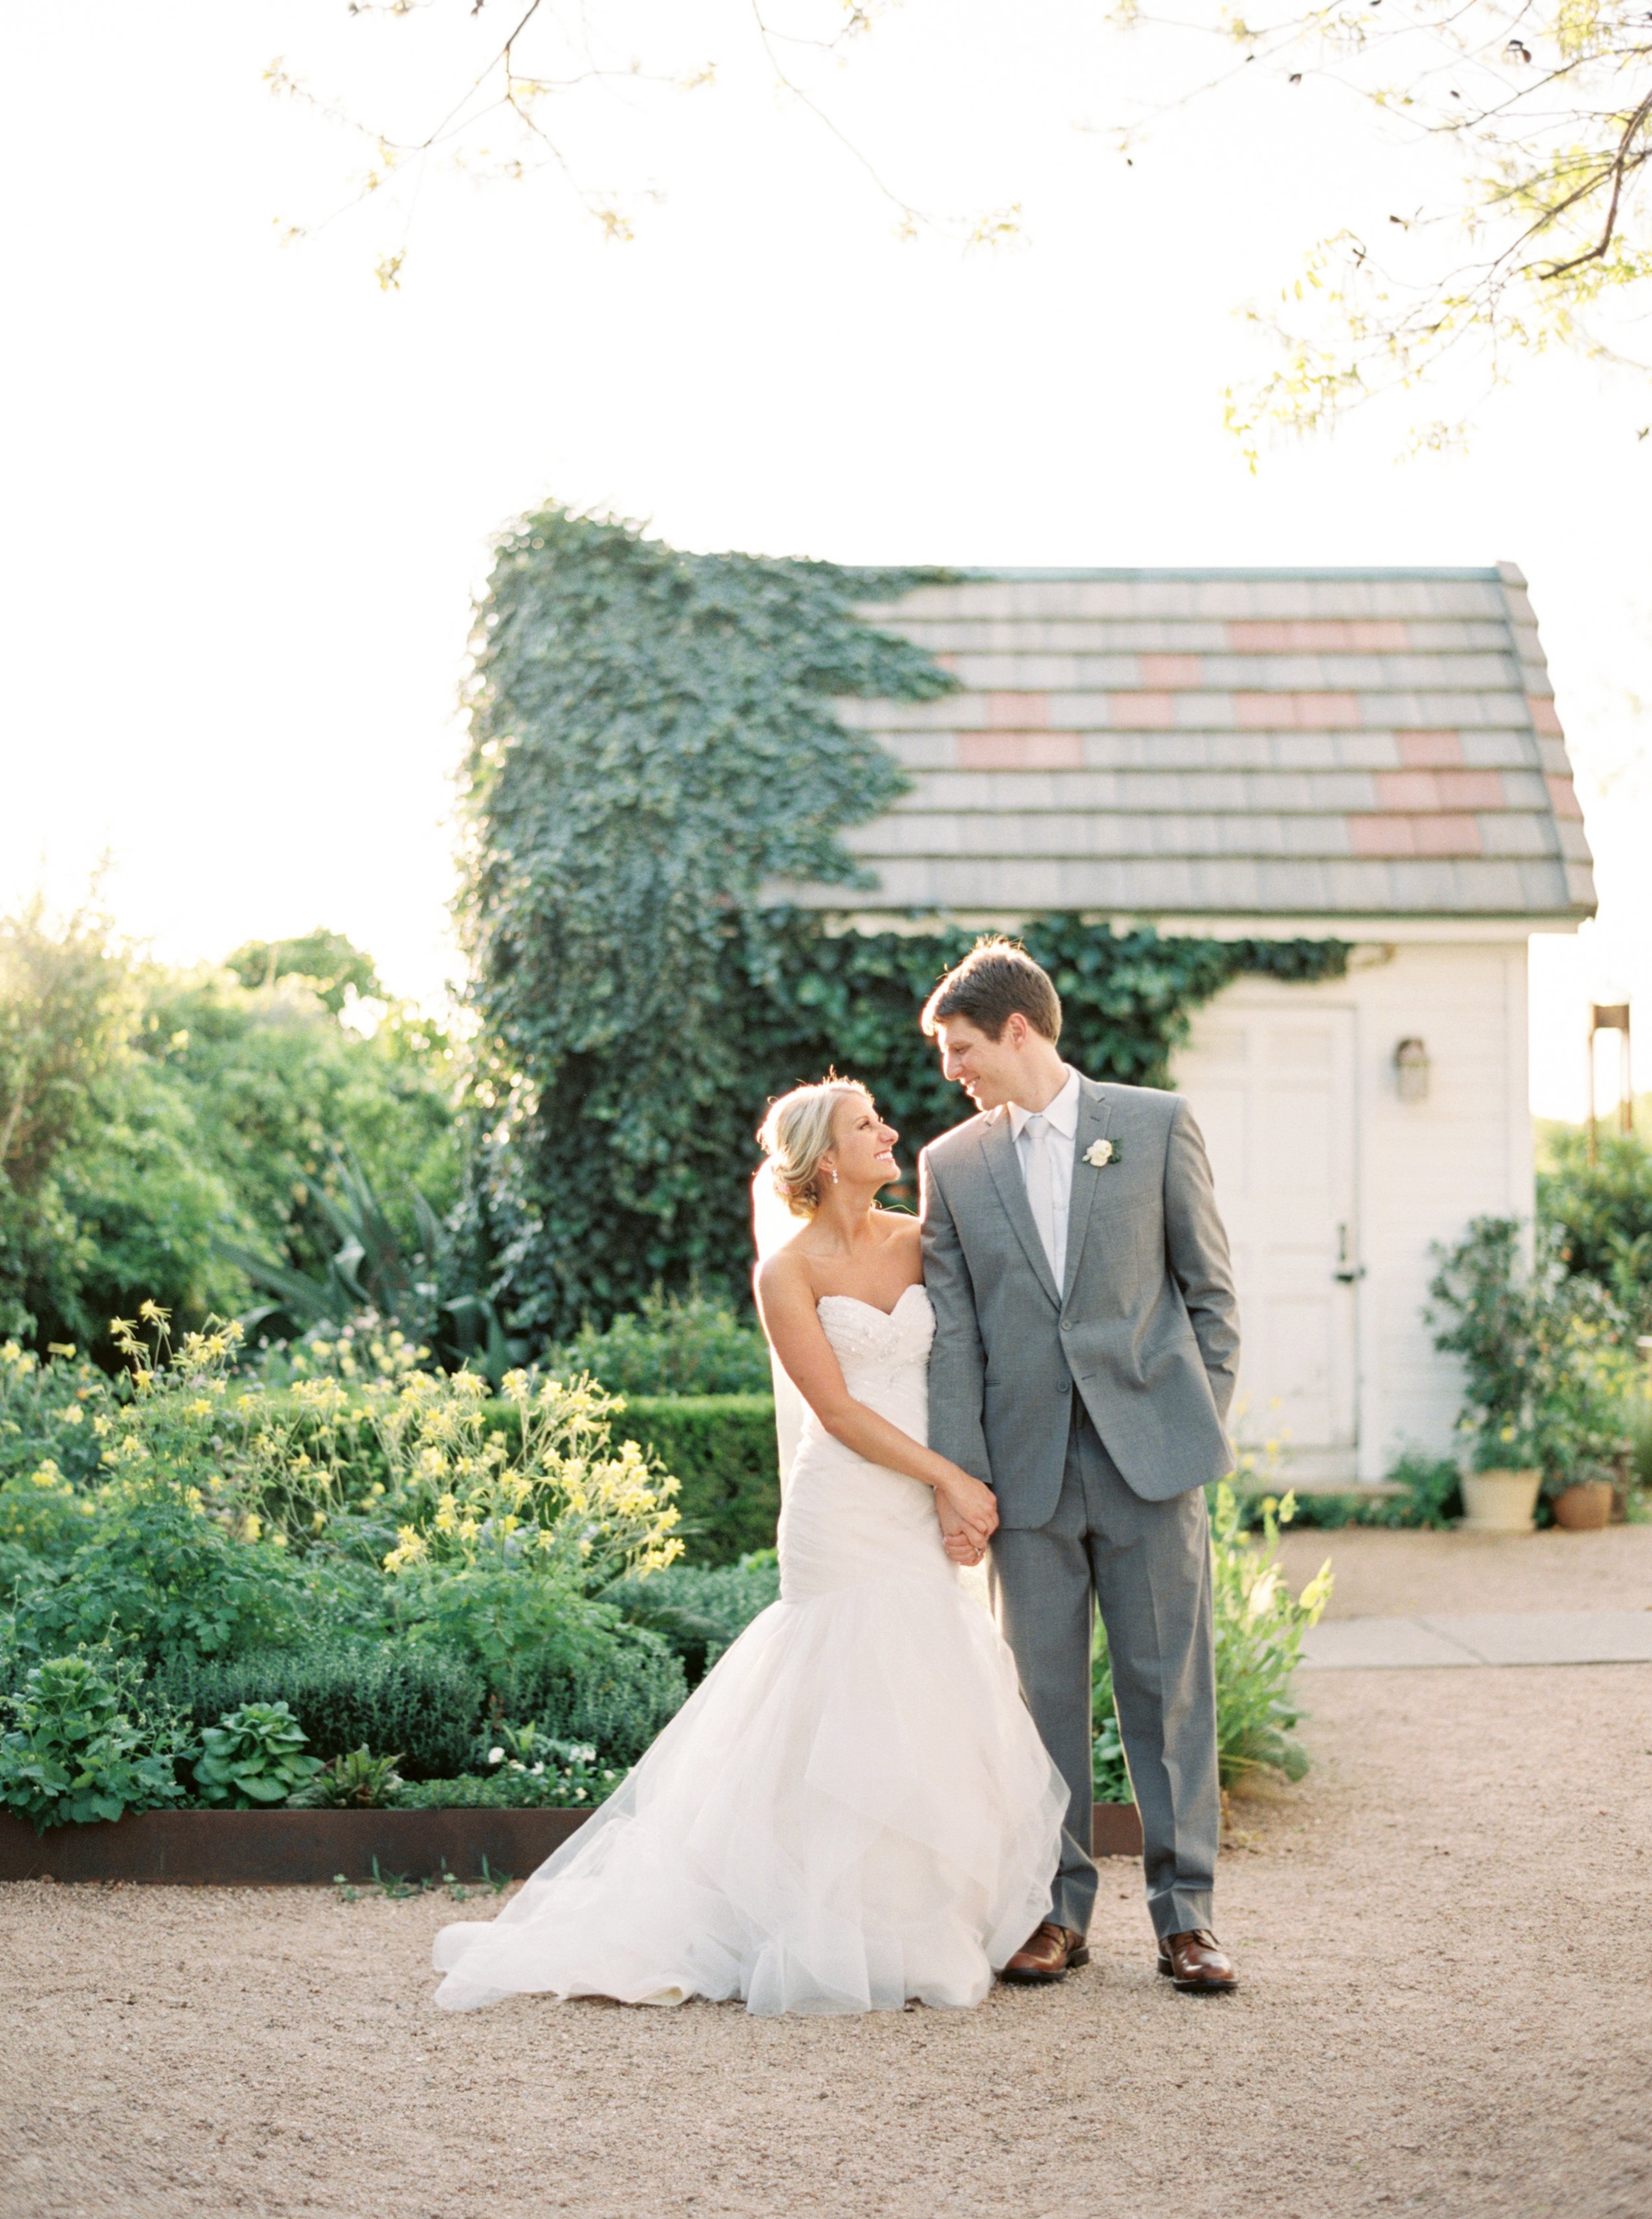 Stunning Outdoor Austin Wedding - Lindsey Brunk